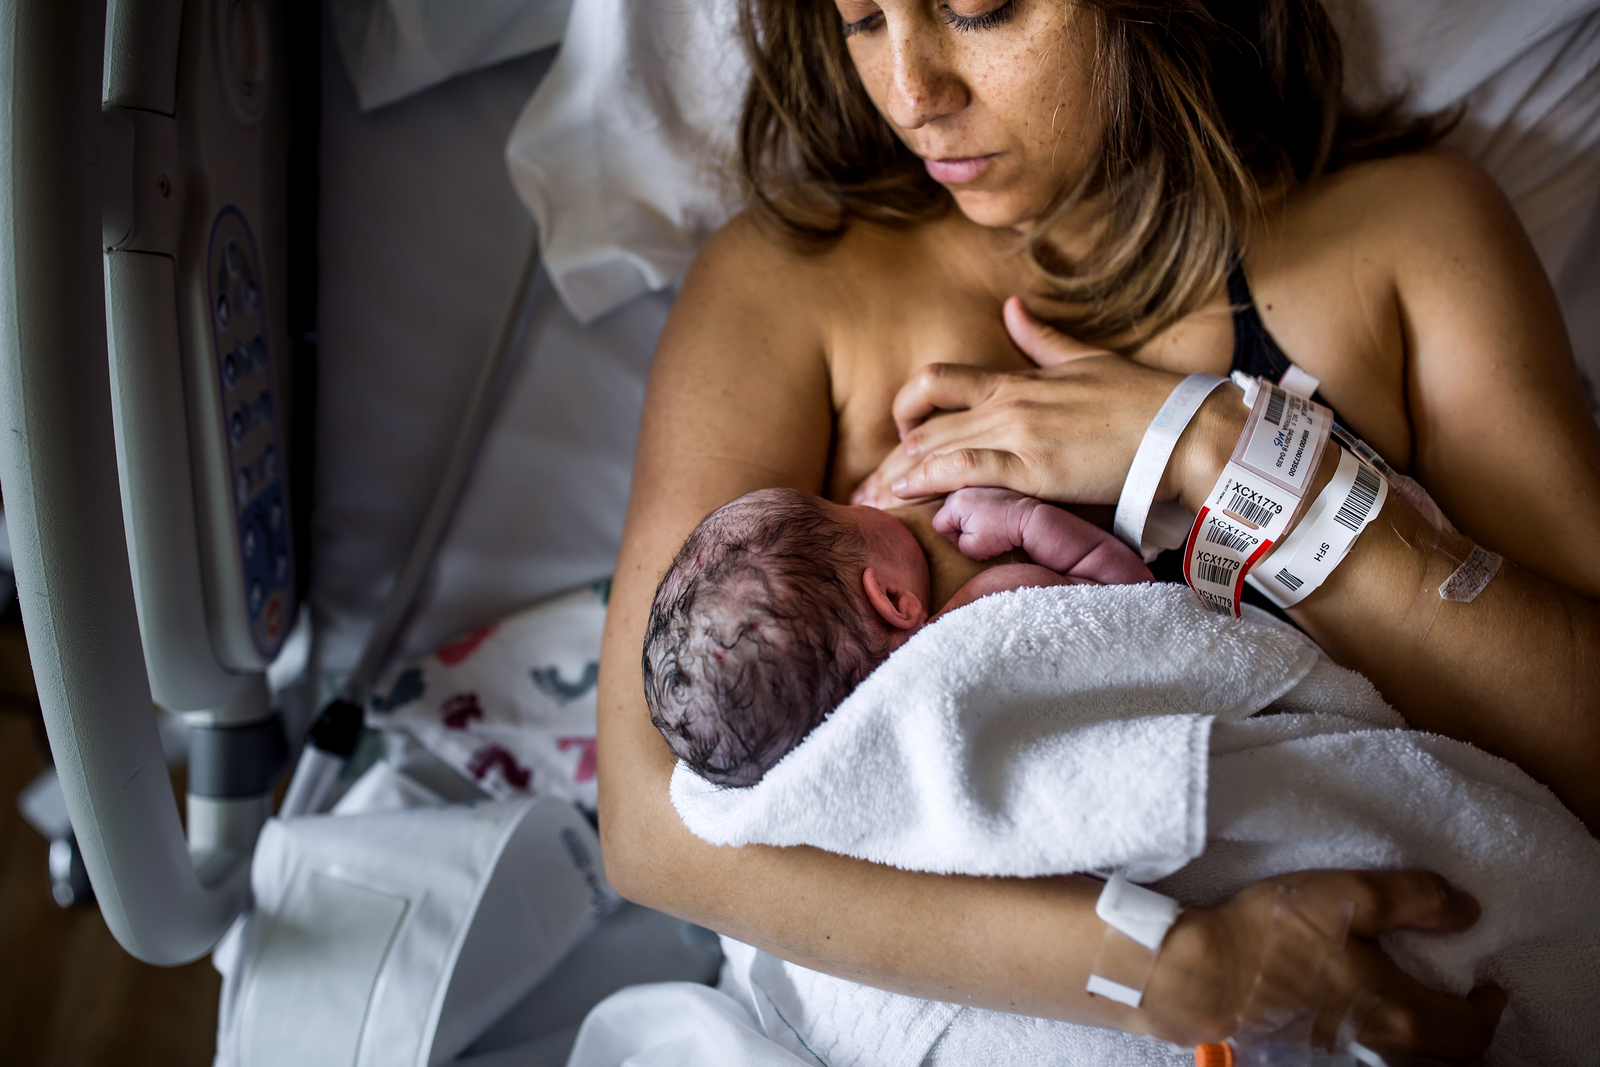 birth photographer, columbus, ga, atlanta, postpartum, mother and newborn, skin to skin, breastfeeding, ker-fox photography 9409-2